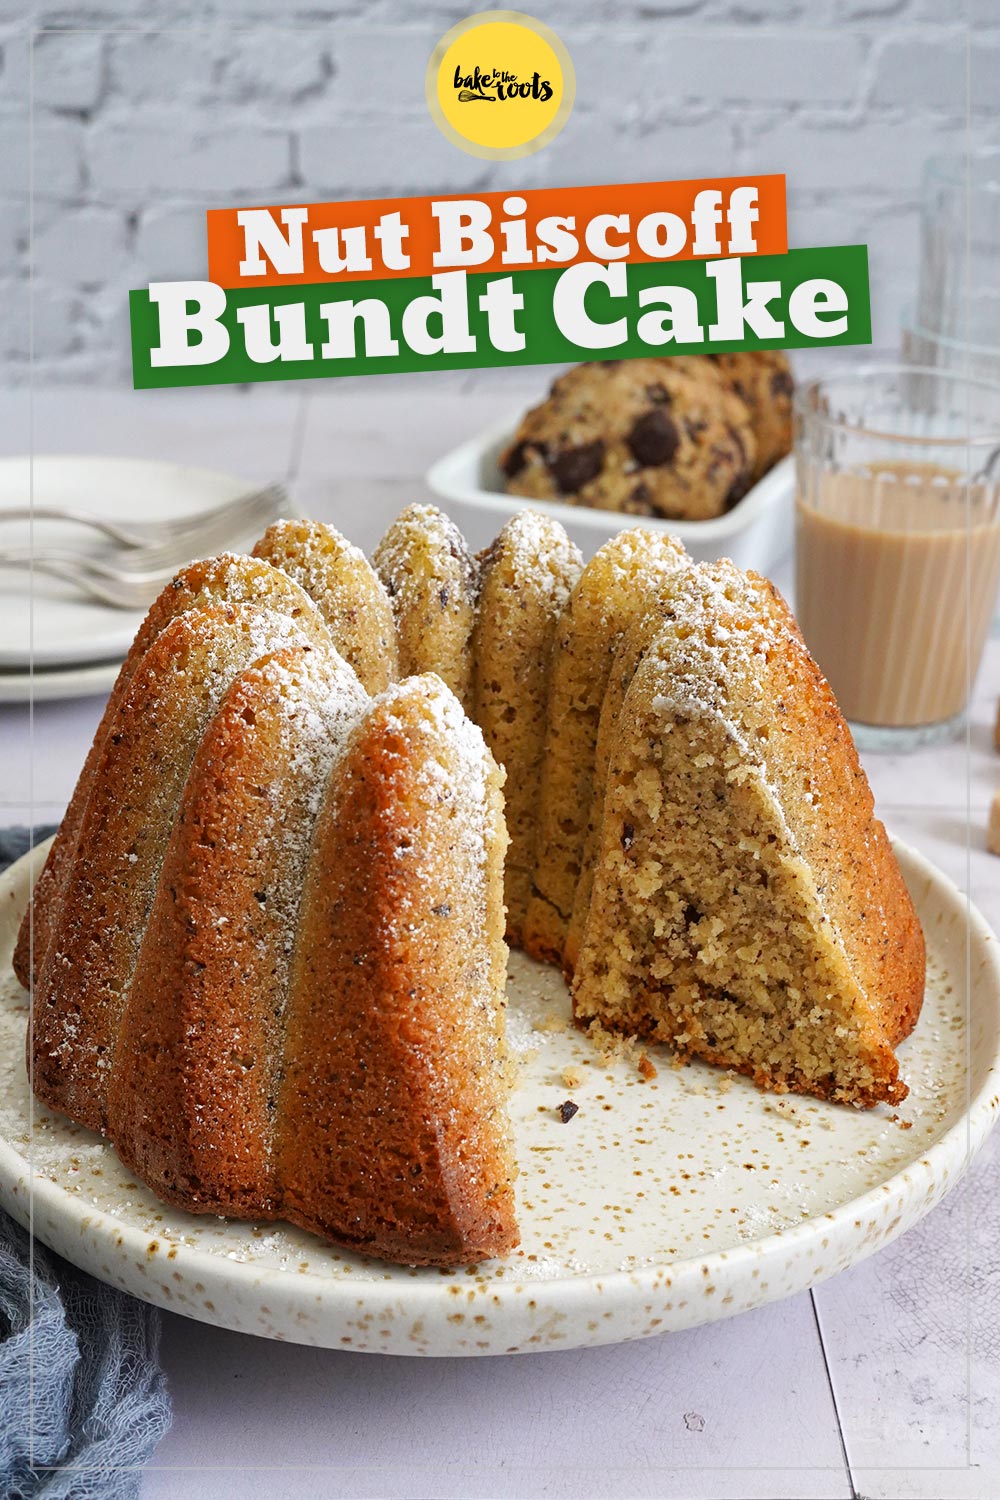 Nut Biscoff Bundt Cake | Bake to the roots